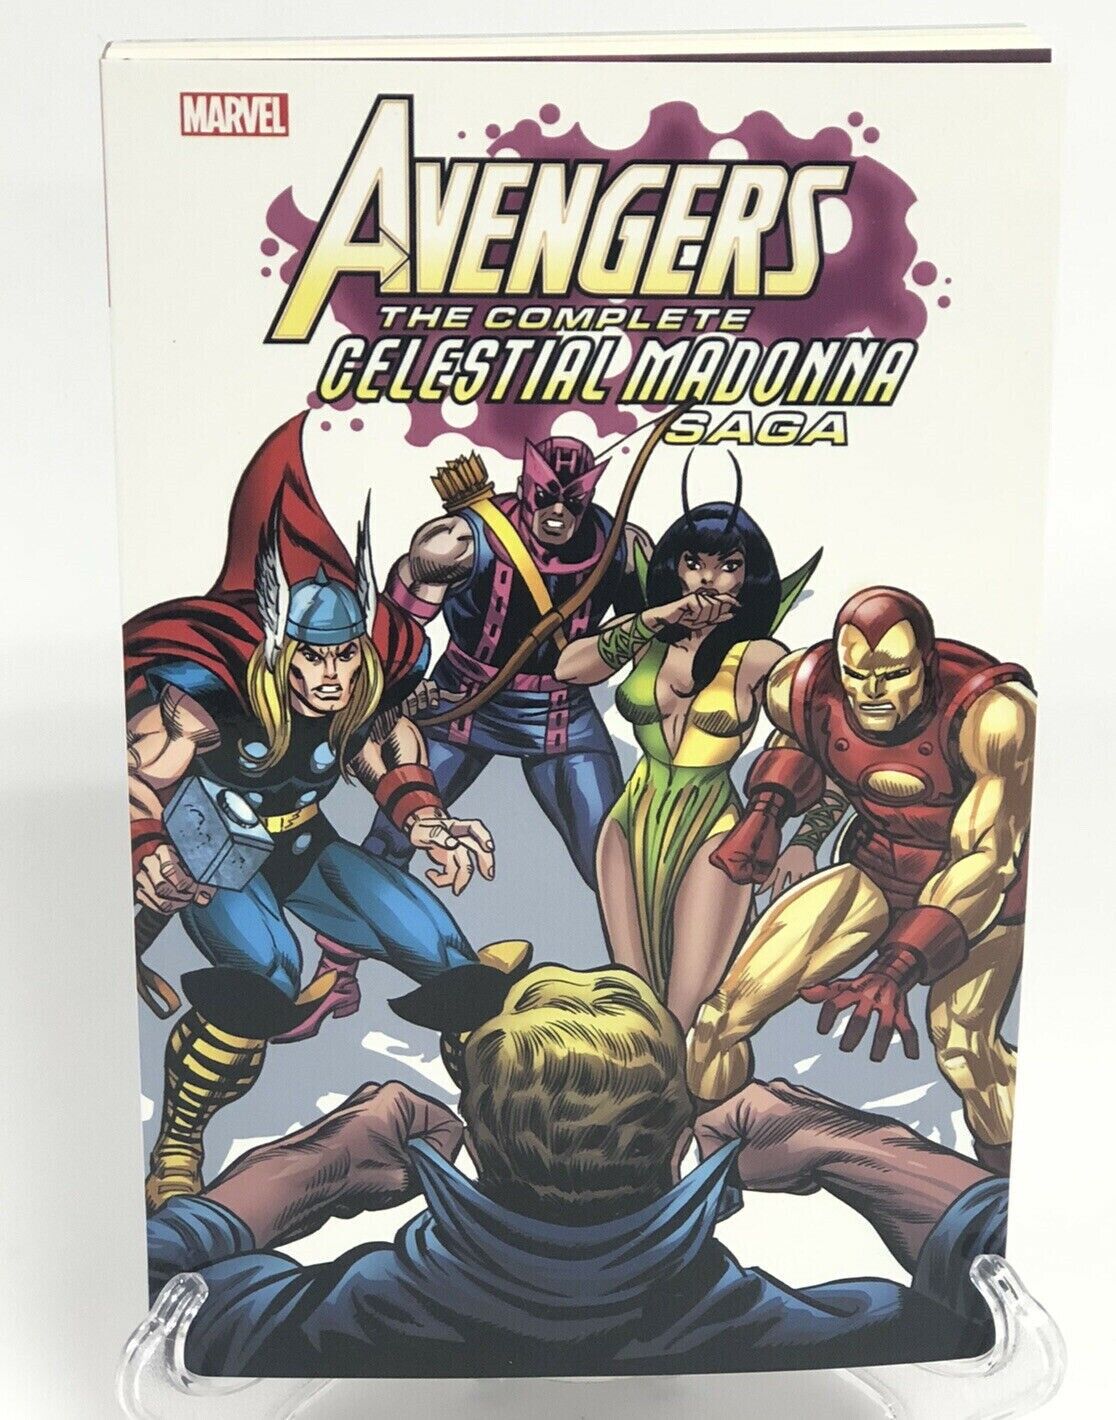 Avengers The Complete Celestial Madonna Saga Marvel Comics New TPB Paperback